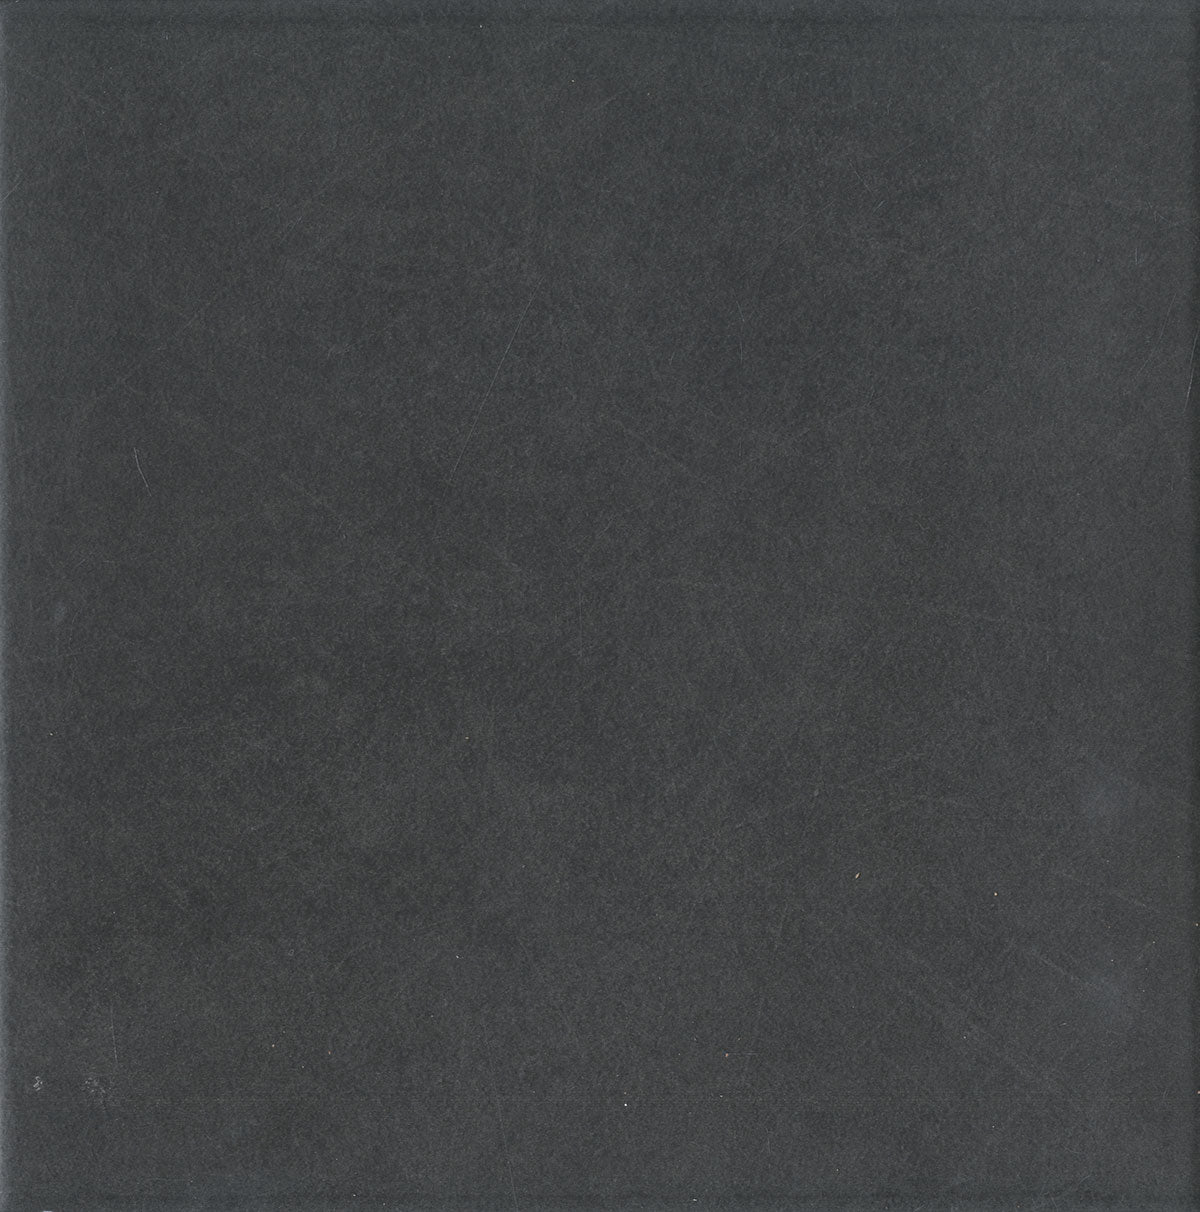 Floors 2000 - Serenity 8 in. x 8 in. Porcelain Tile - Black